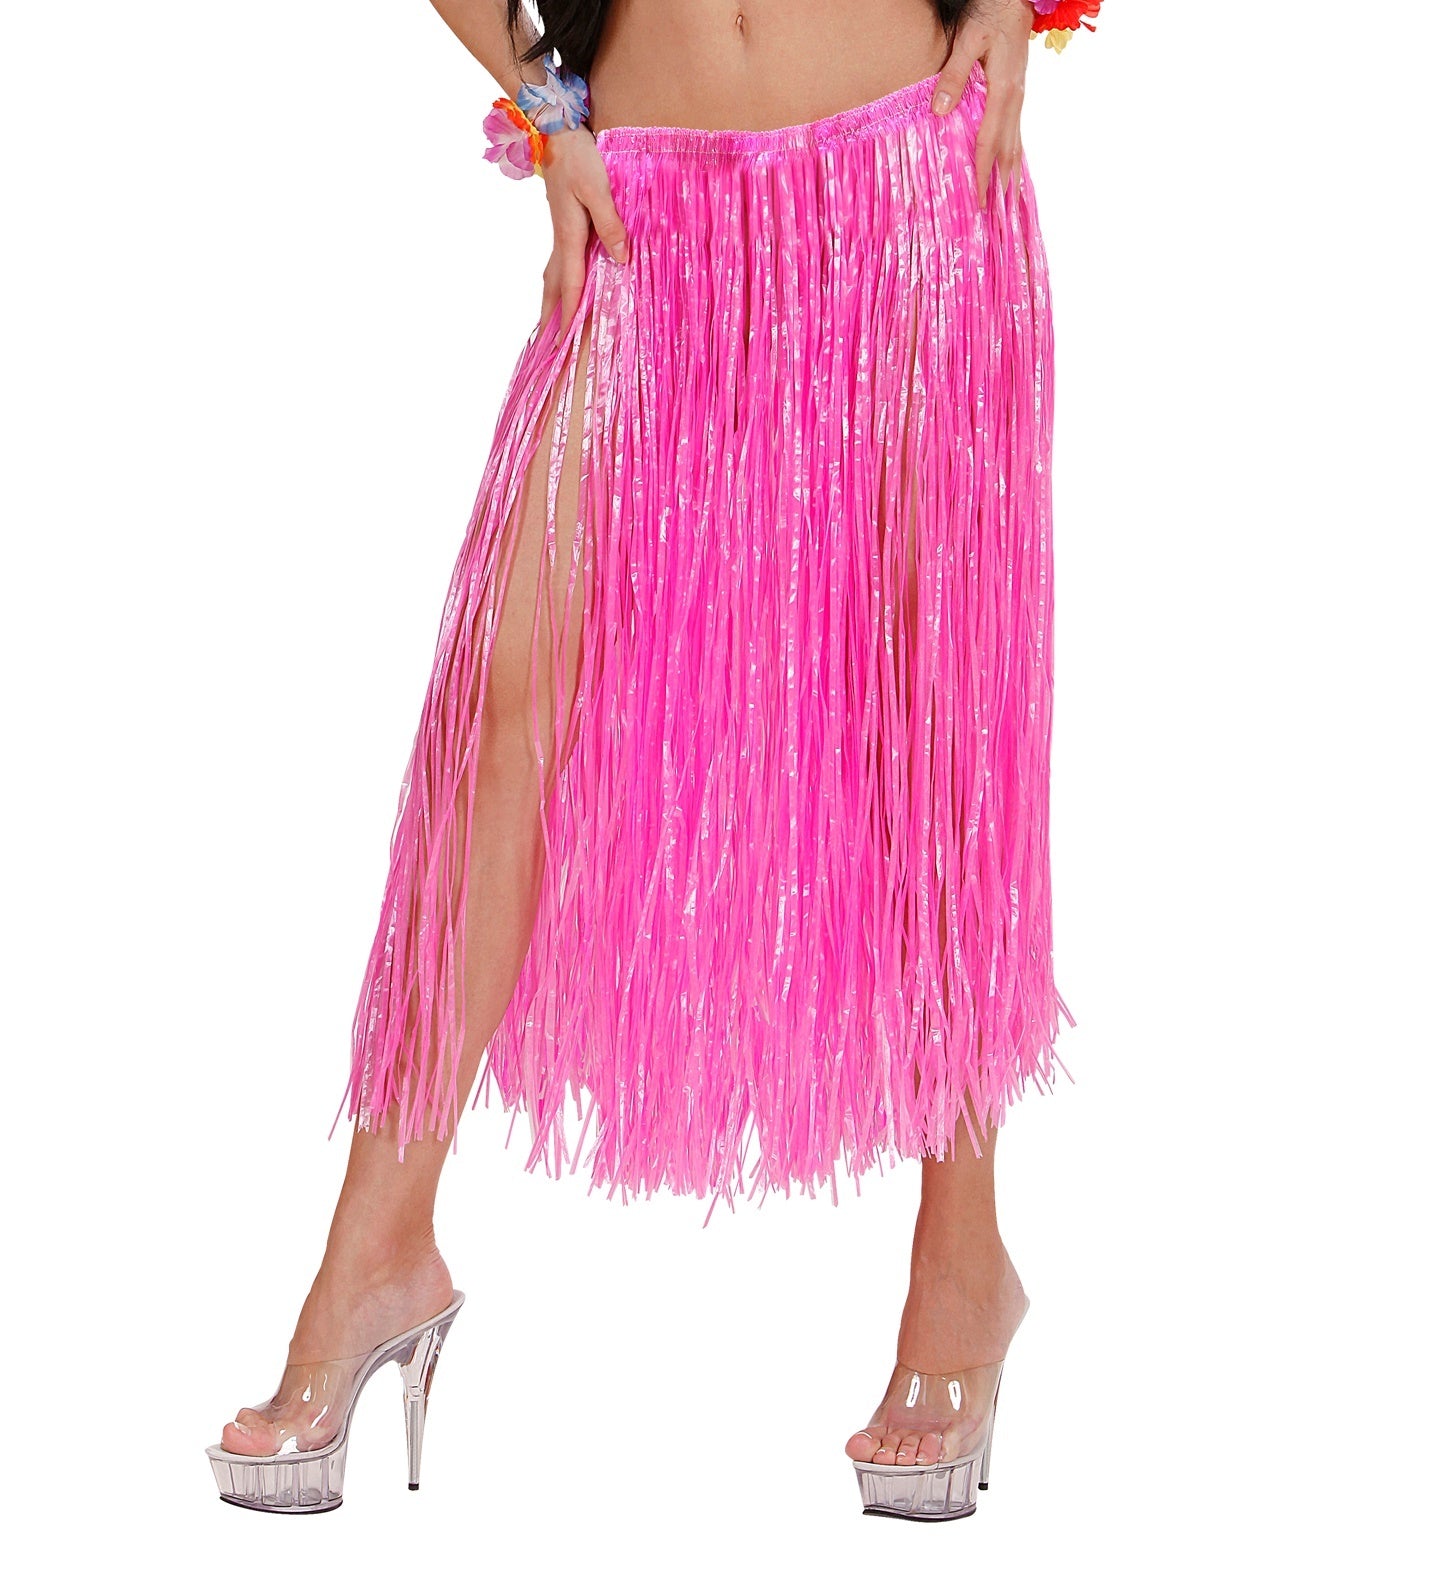 Widmann - Hawaii & Carribean & Tropisch Kostuum - Leilana Hawaiirok 75 Centimeter, Roze Vrouw - roze - One Size - Carnavalskleding - Verkleedkleding